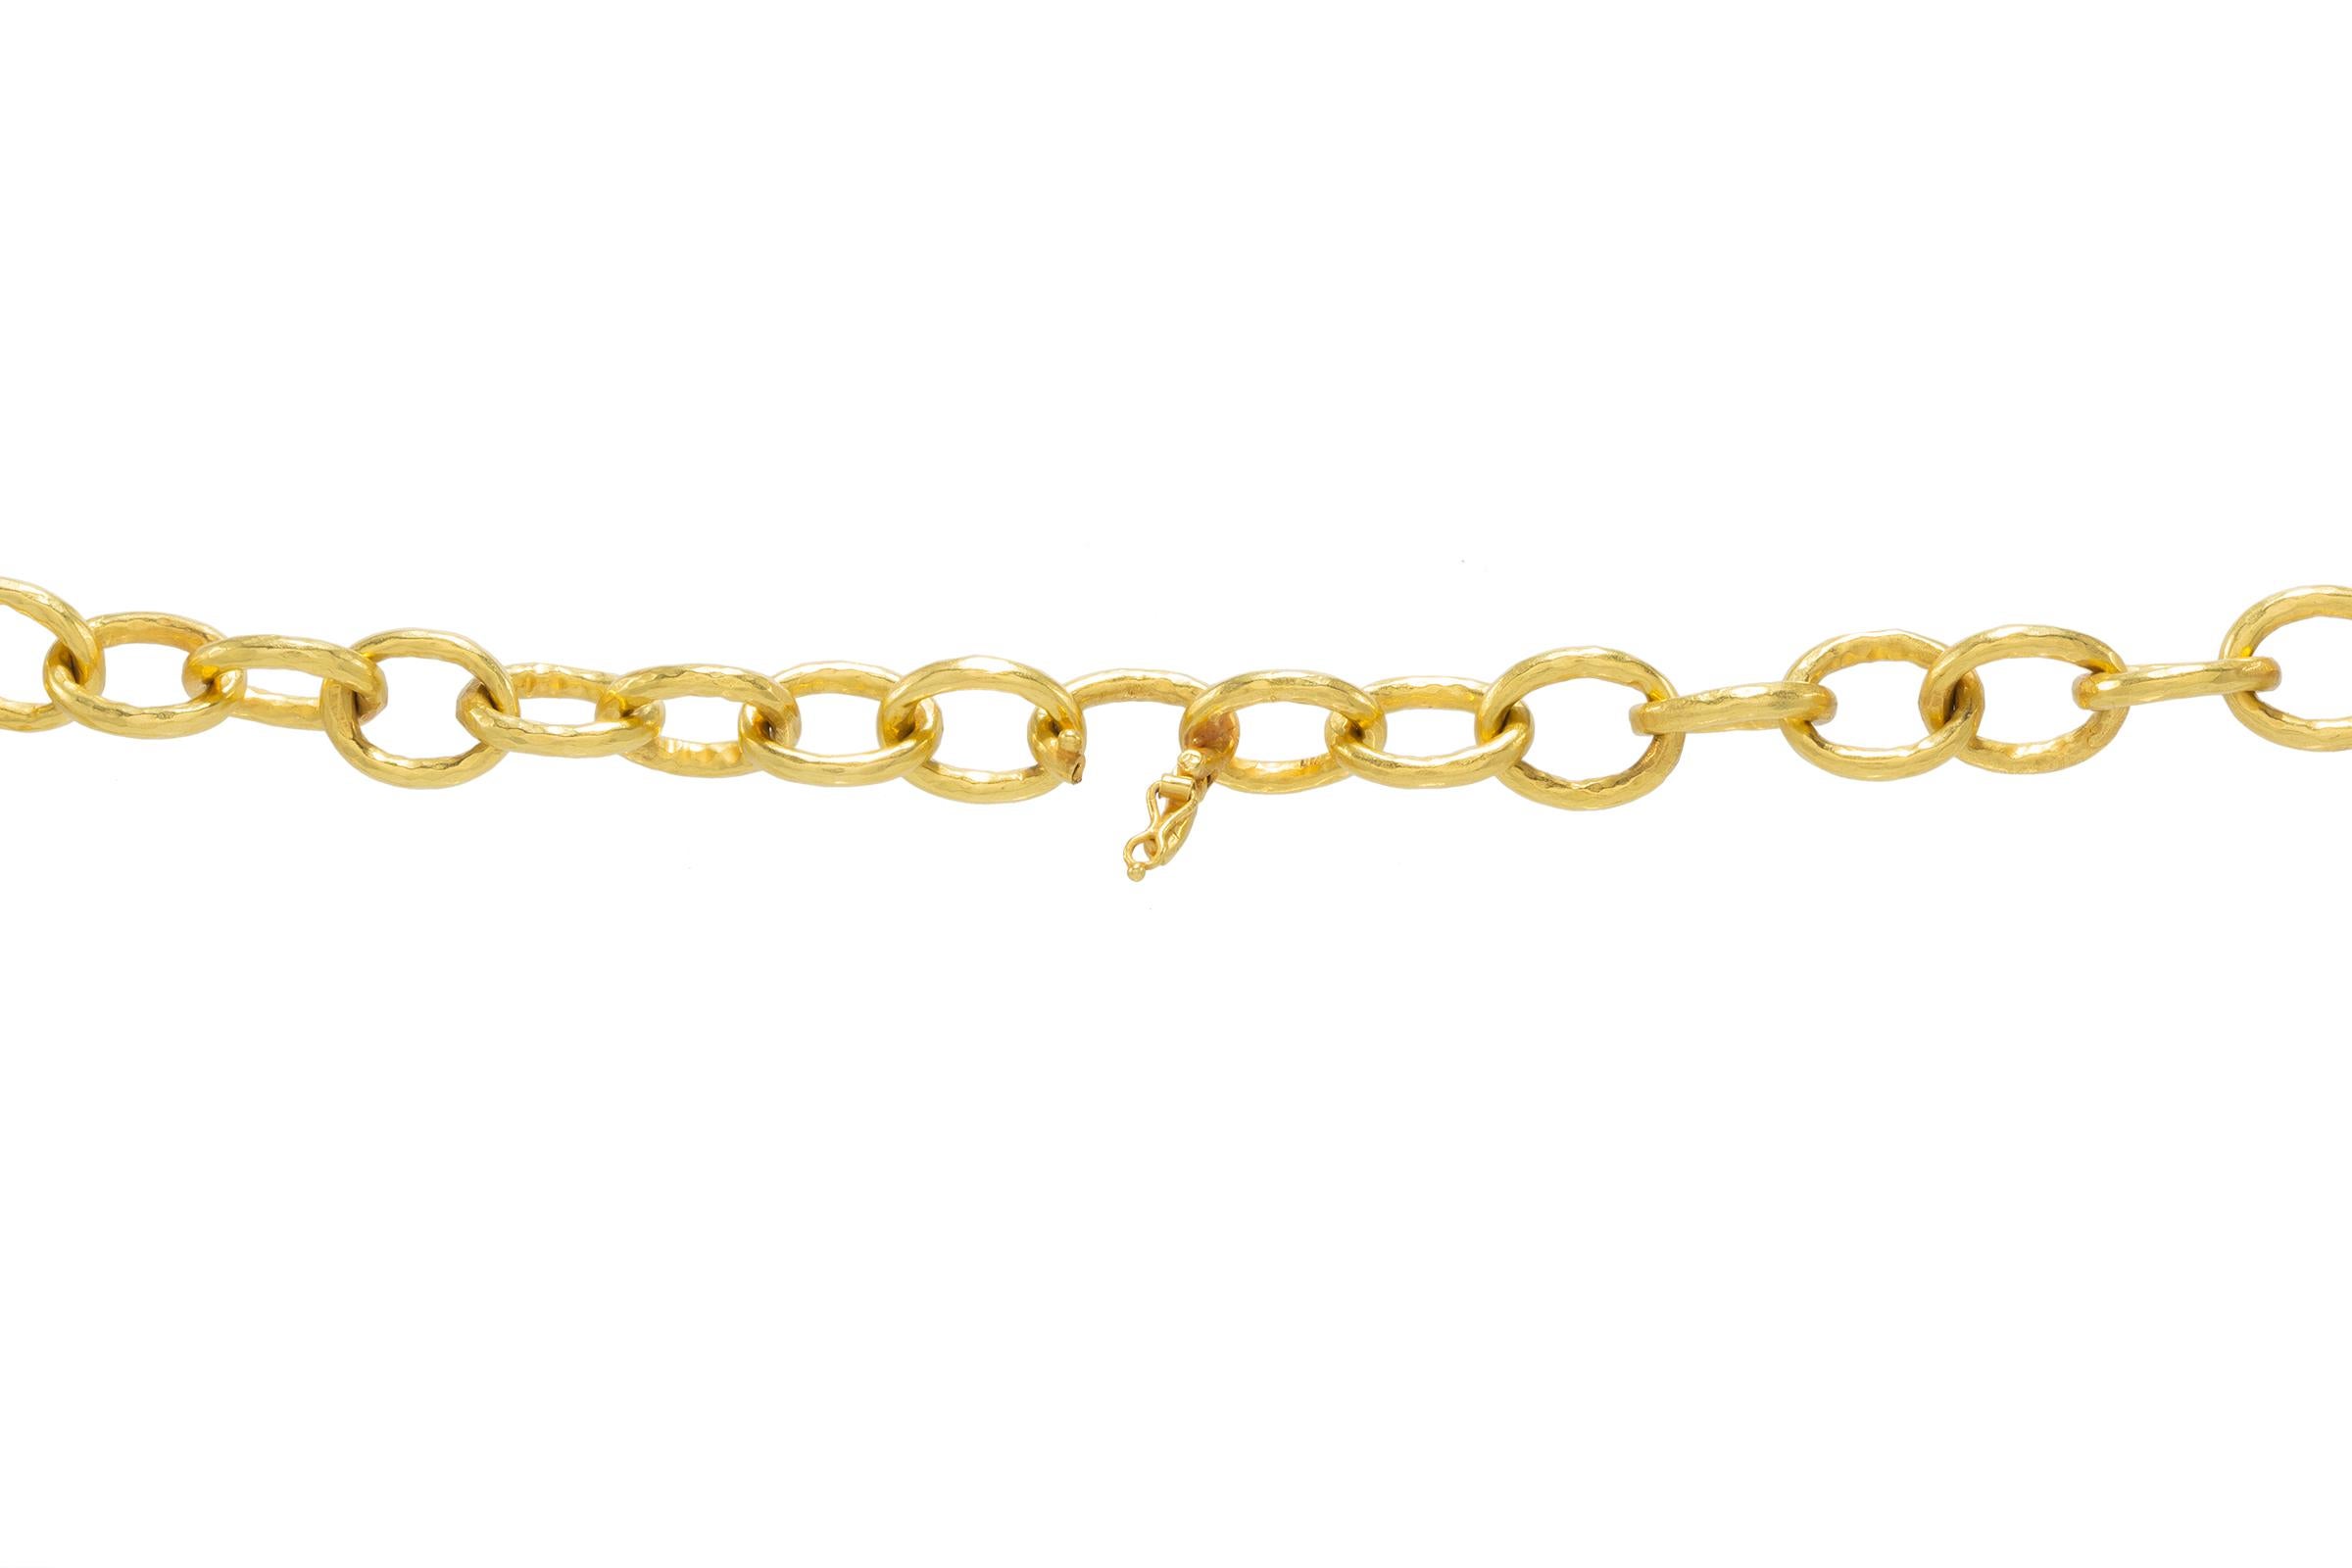 20k gold chain